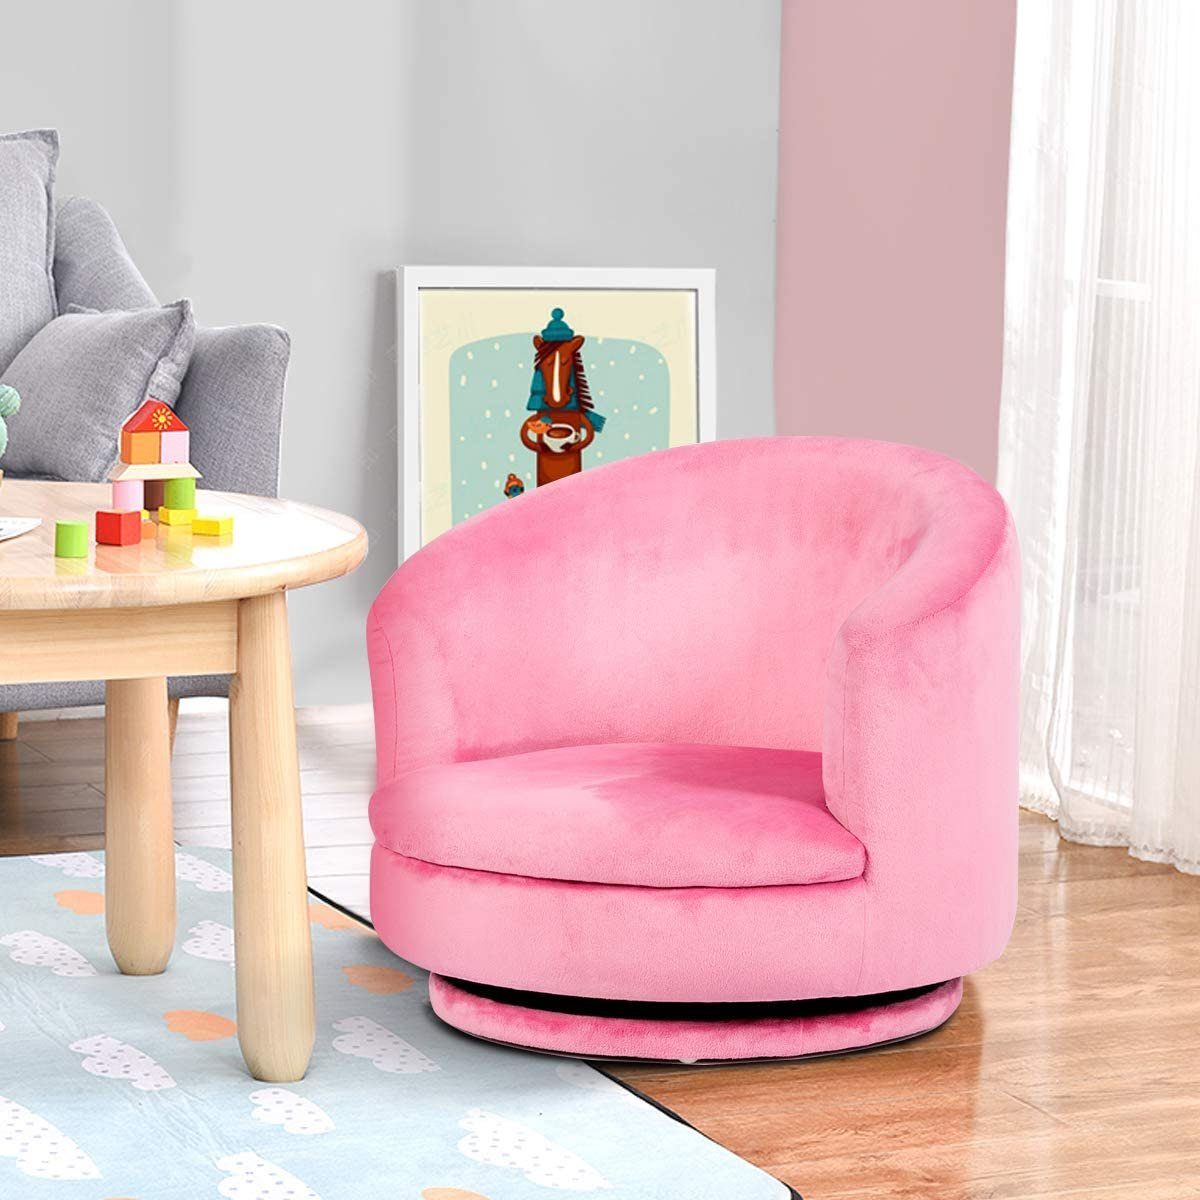 59,5 x 43 x 46,5 cm Mini-Sofa-Sessel mit Holzstruktur und Kunststoff rutschfeste Füße HOMCOM Kindersessel Gelb+Blau Kindersofa,Kinderzimmer Sofa Polyester